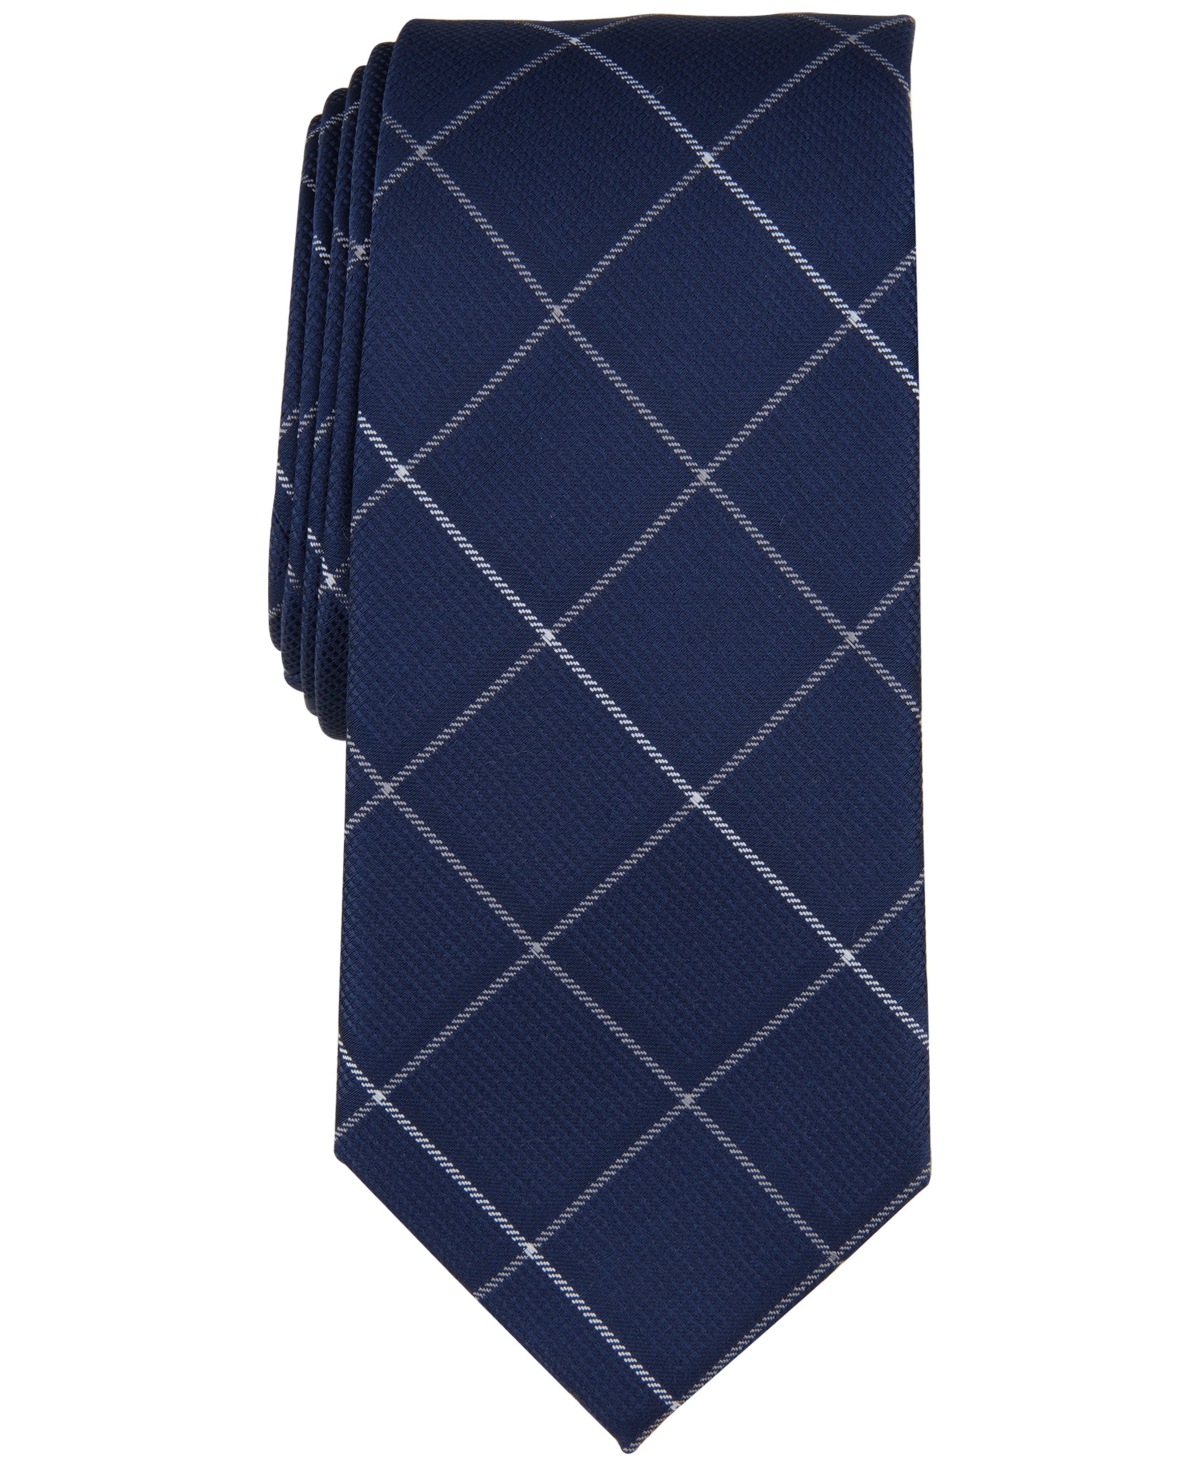 Men's Jaynelle Grid Tie, Created for Macy's - Navy